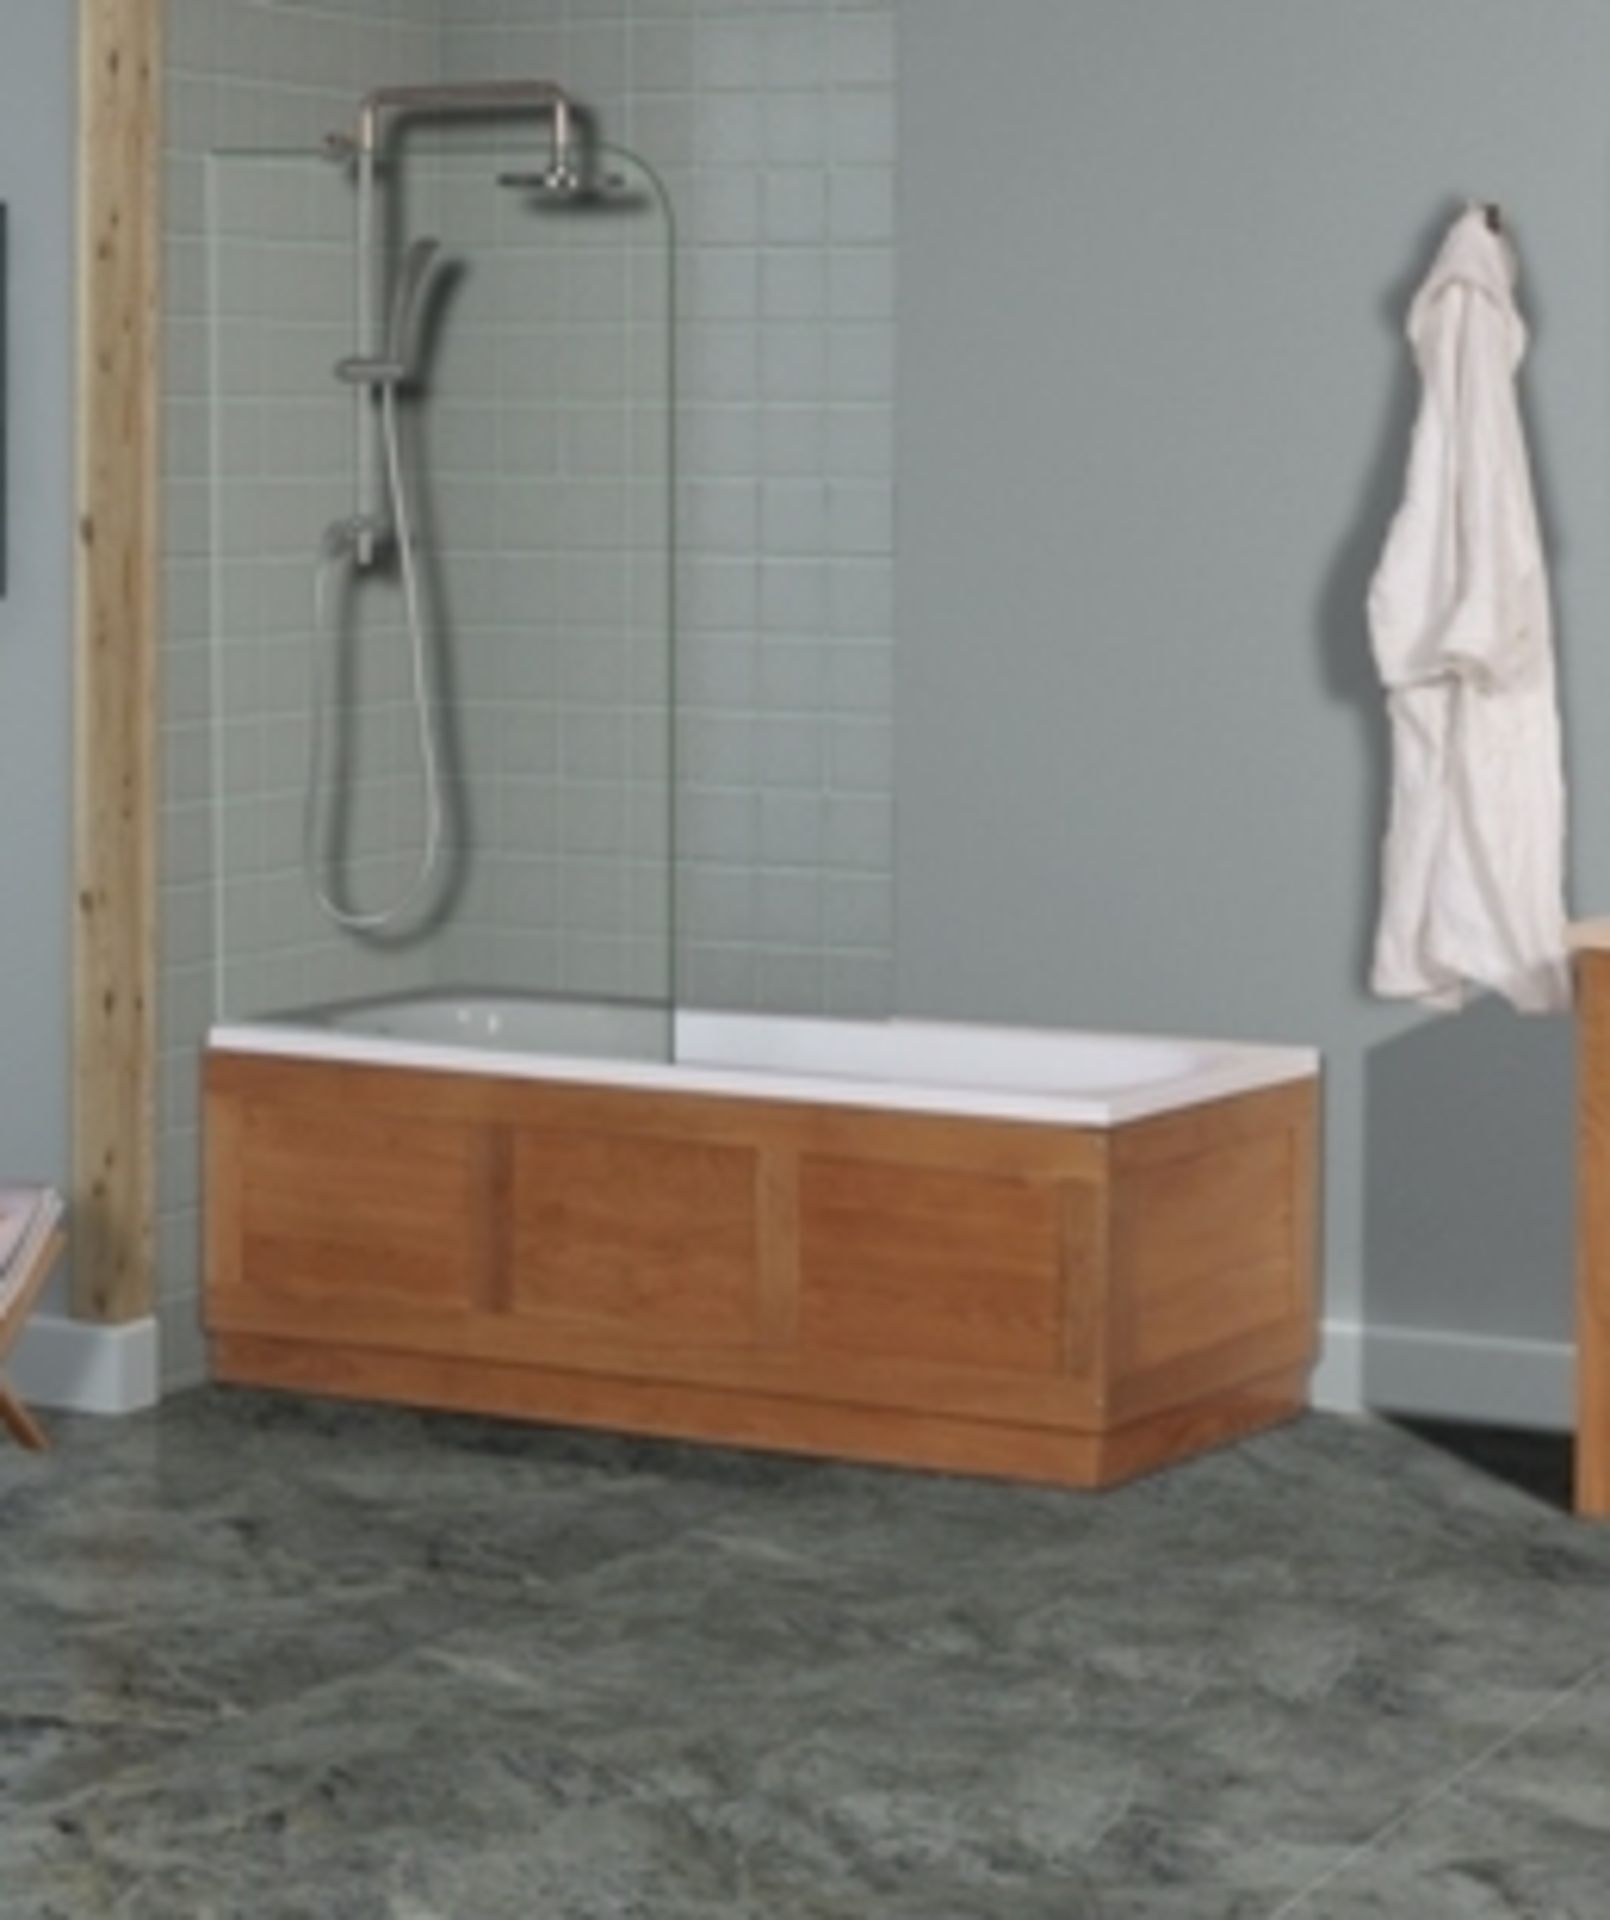 1 x Stonearth 1700mm Front Bath Panel - American Solid Oak - Original RRP £799